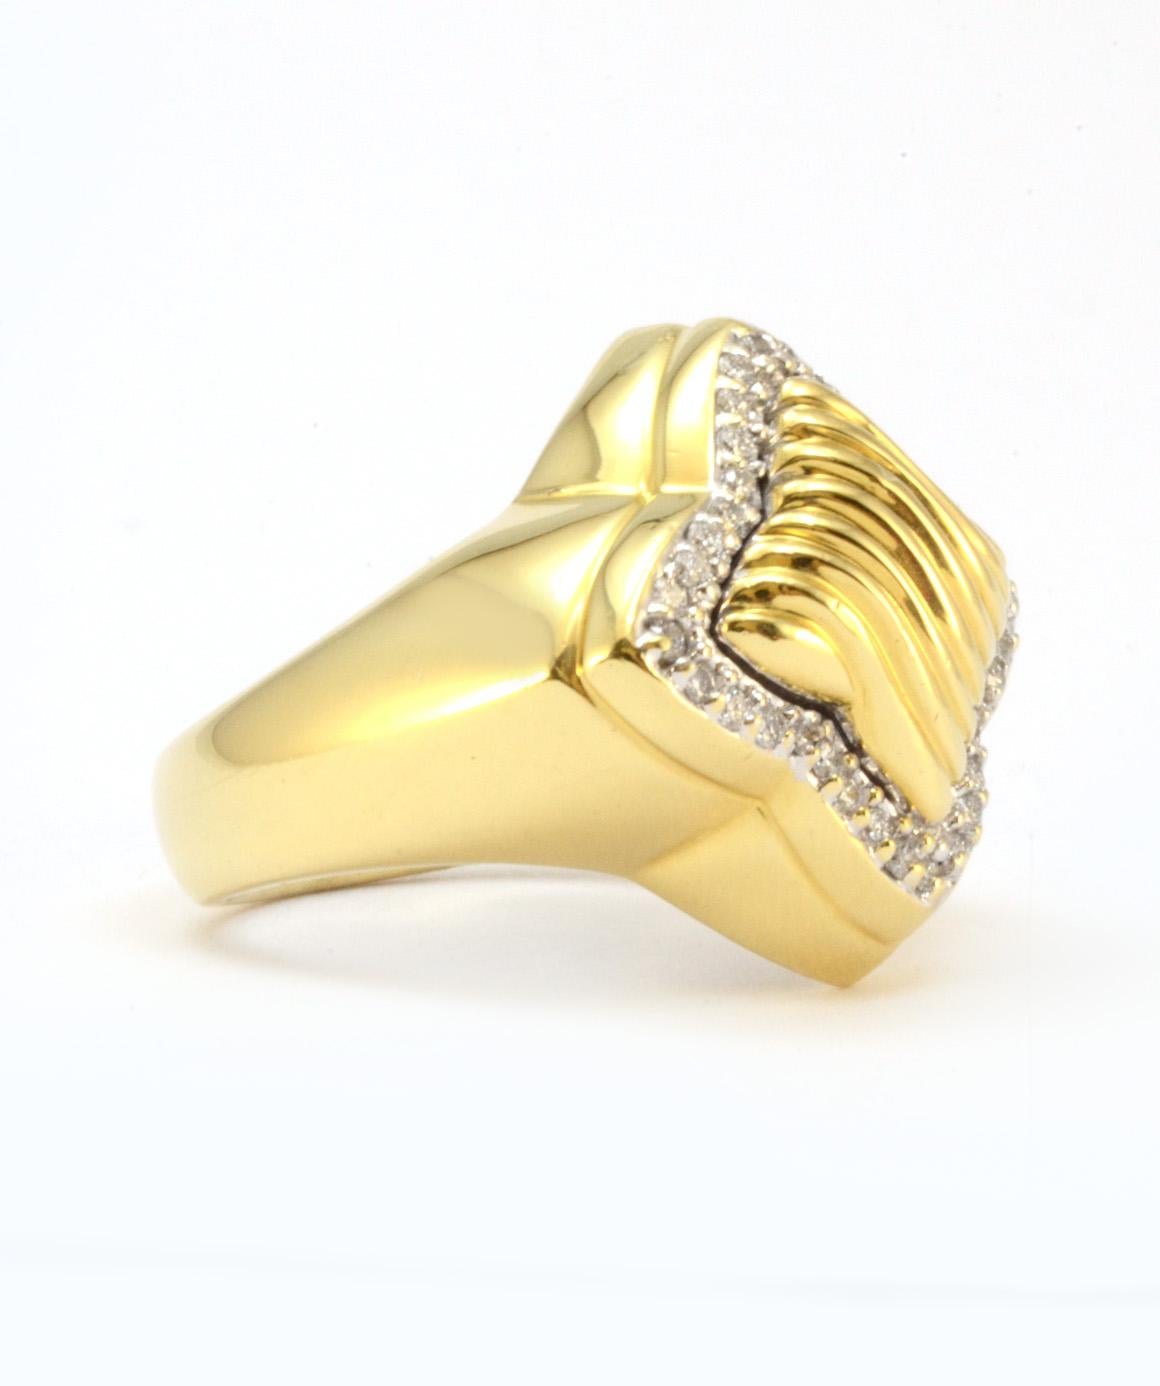 Women's or Men's 100% Authentic David Yurman 18 Karat Yellow Gold Natural Diamond Ring